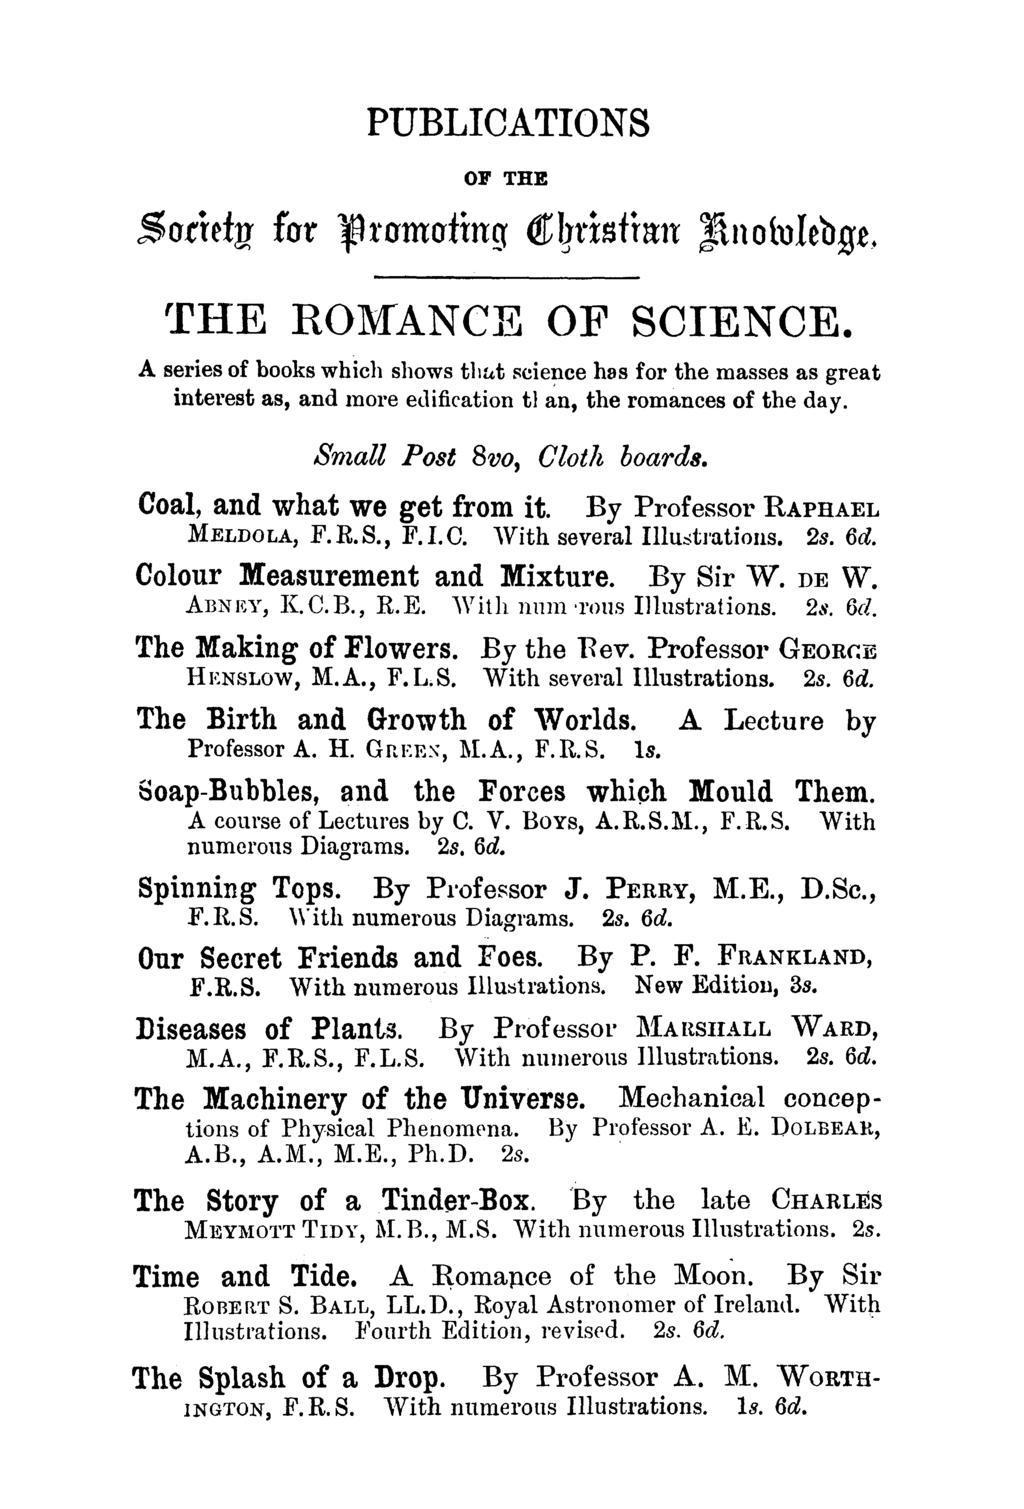 PUBLICATIONS OF THE Sonefjr for ^ramorthtg Cbrafmit Jkofolebgt, THE ROMANCE OF SCIENCE.